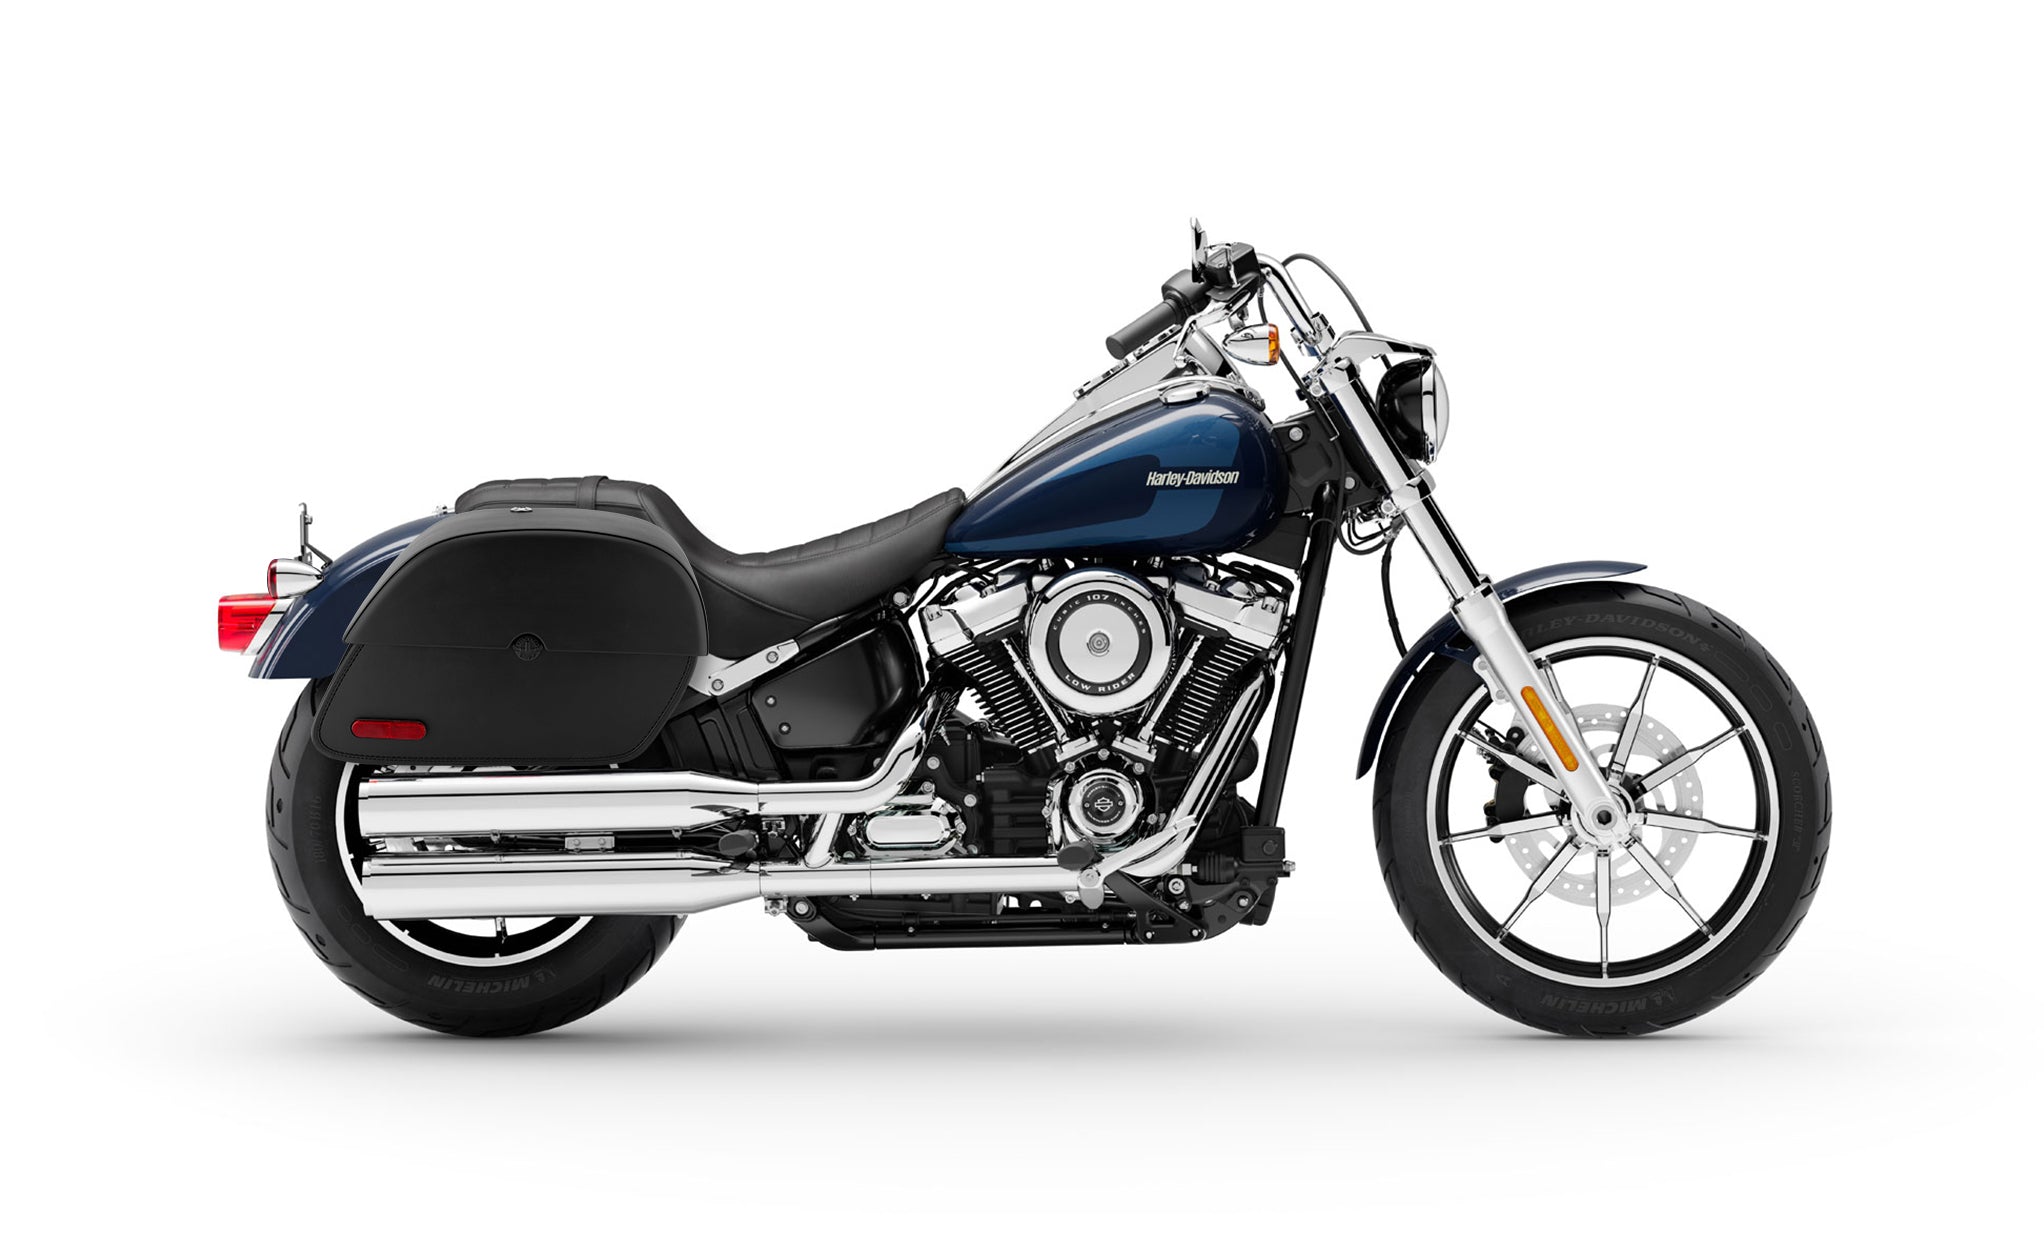 Viking Panzer Large Leather Motorcycle Saddlebags For Harley Davidson Softail Low Rider Fxlr on Bike Photo @expand